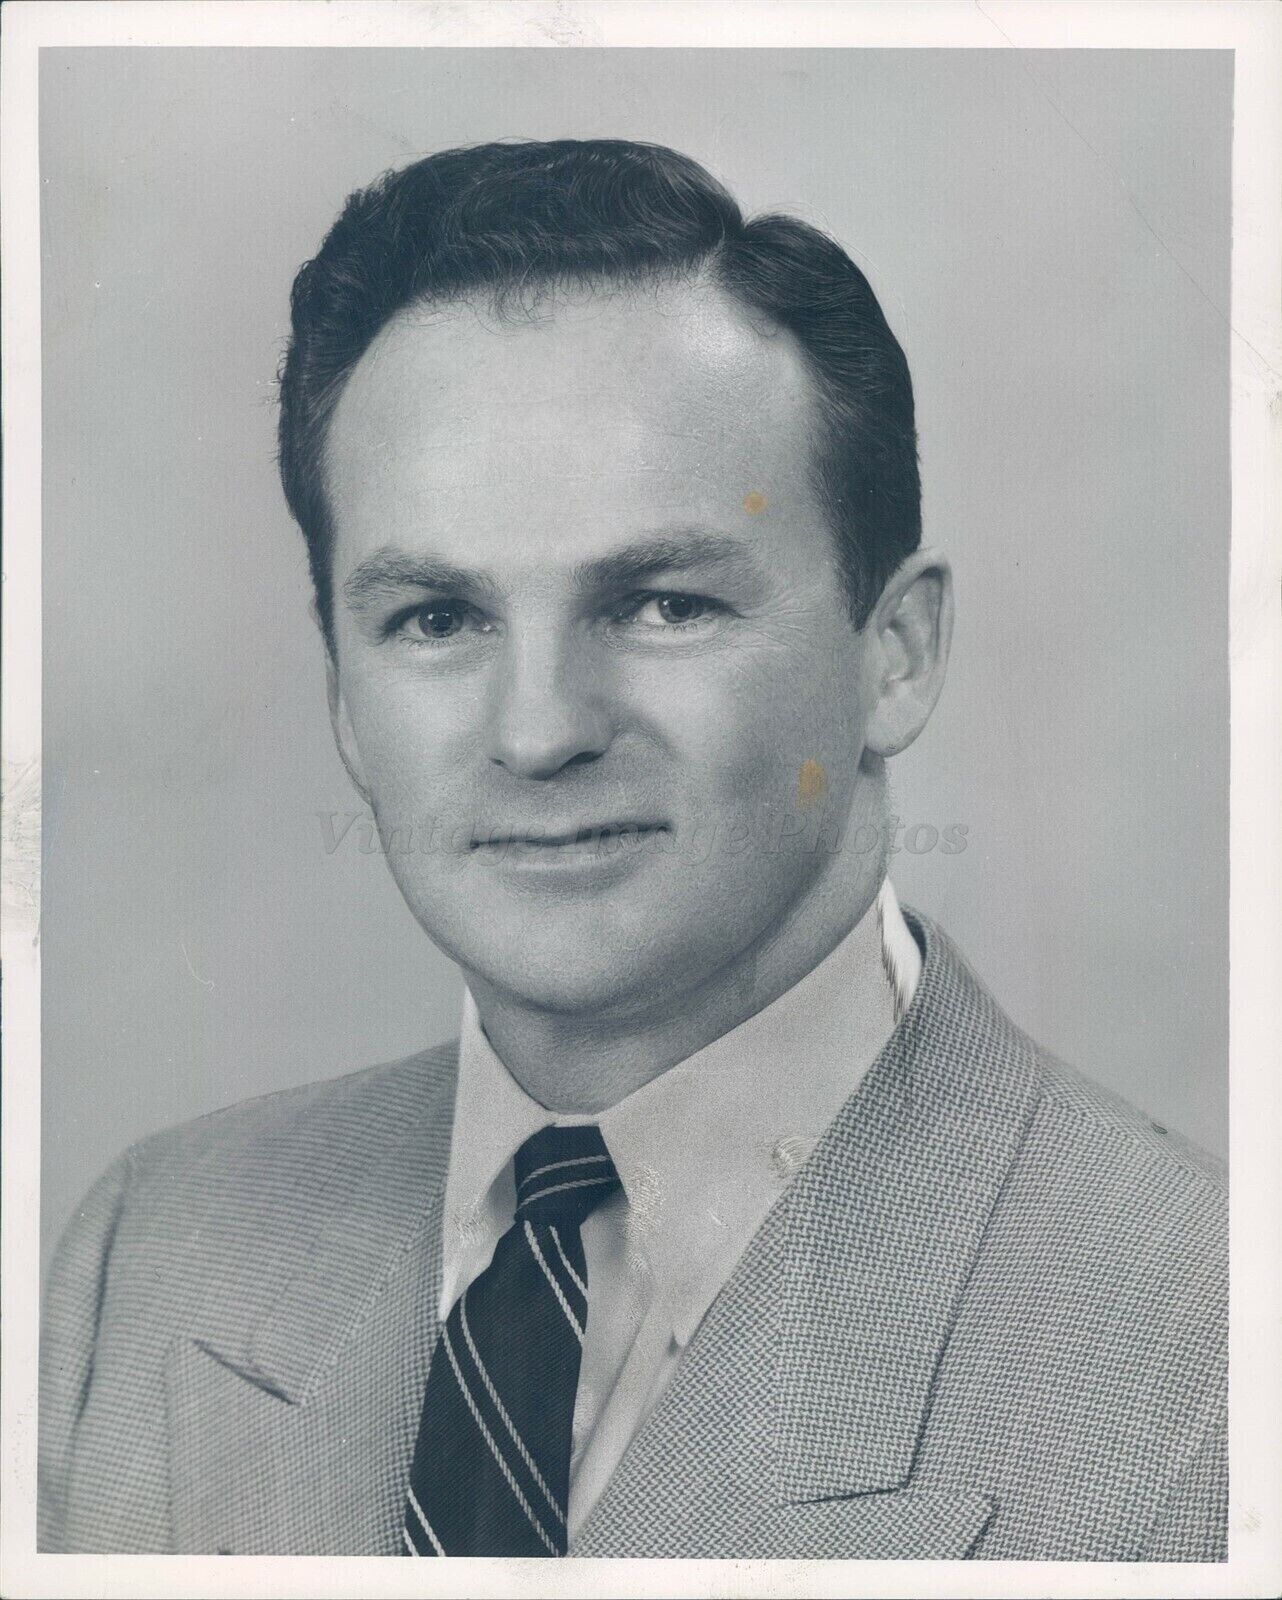 1956 Vernon Parkhurst Business Man Smiling Vintage Original Historic Press Photo